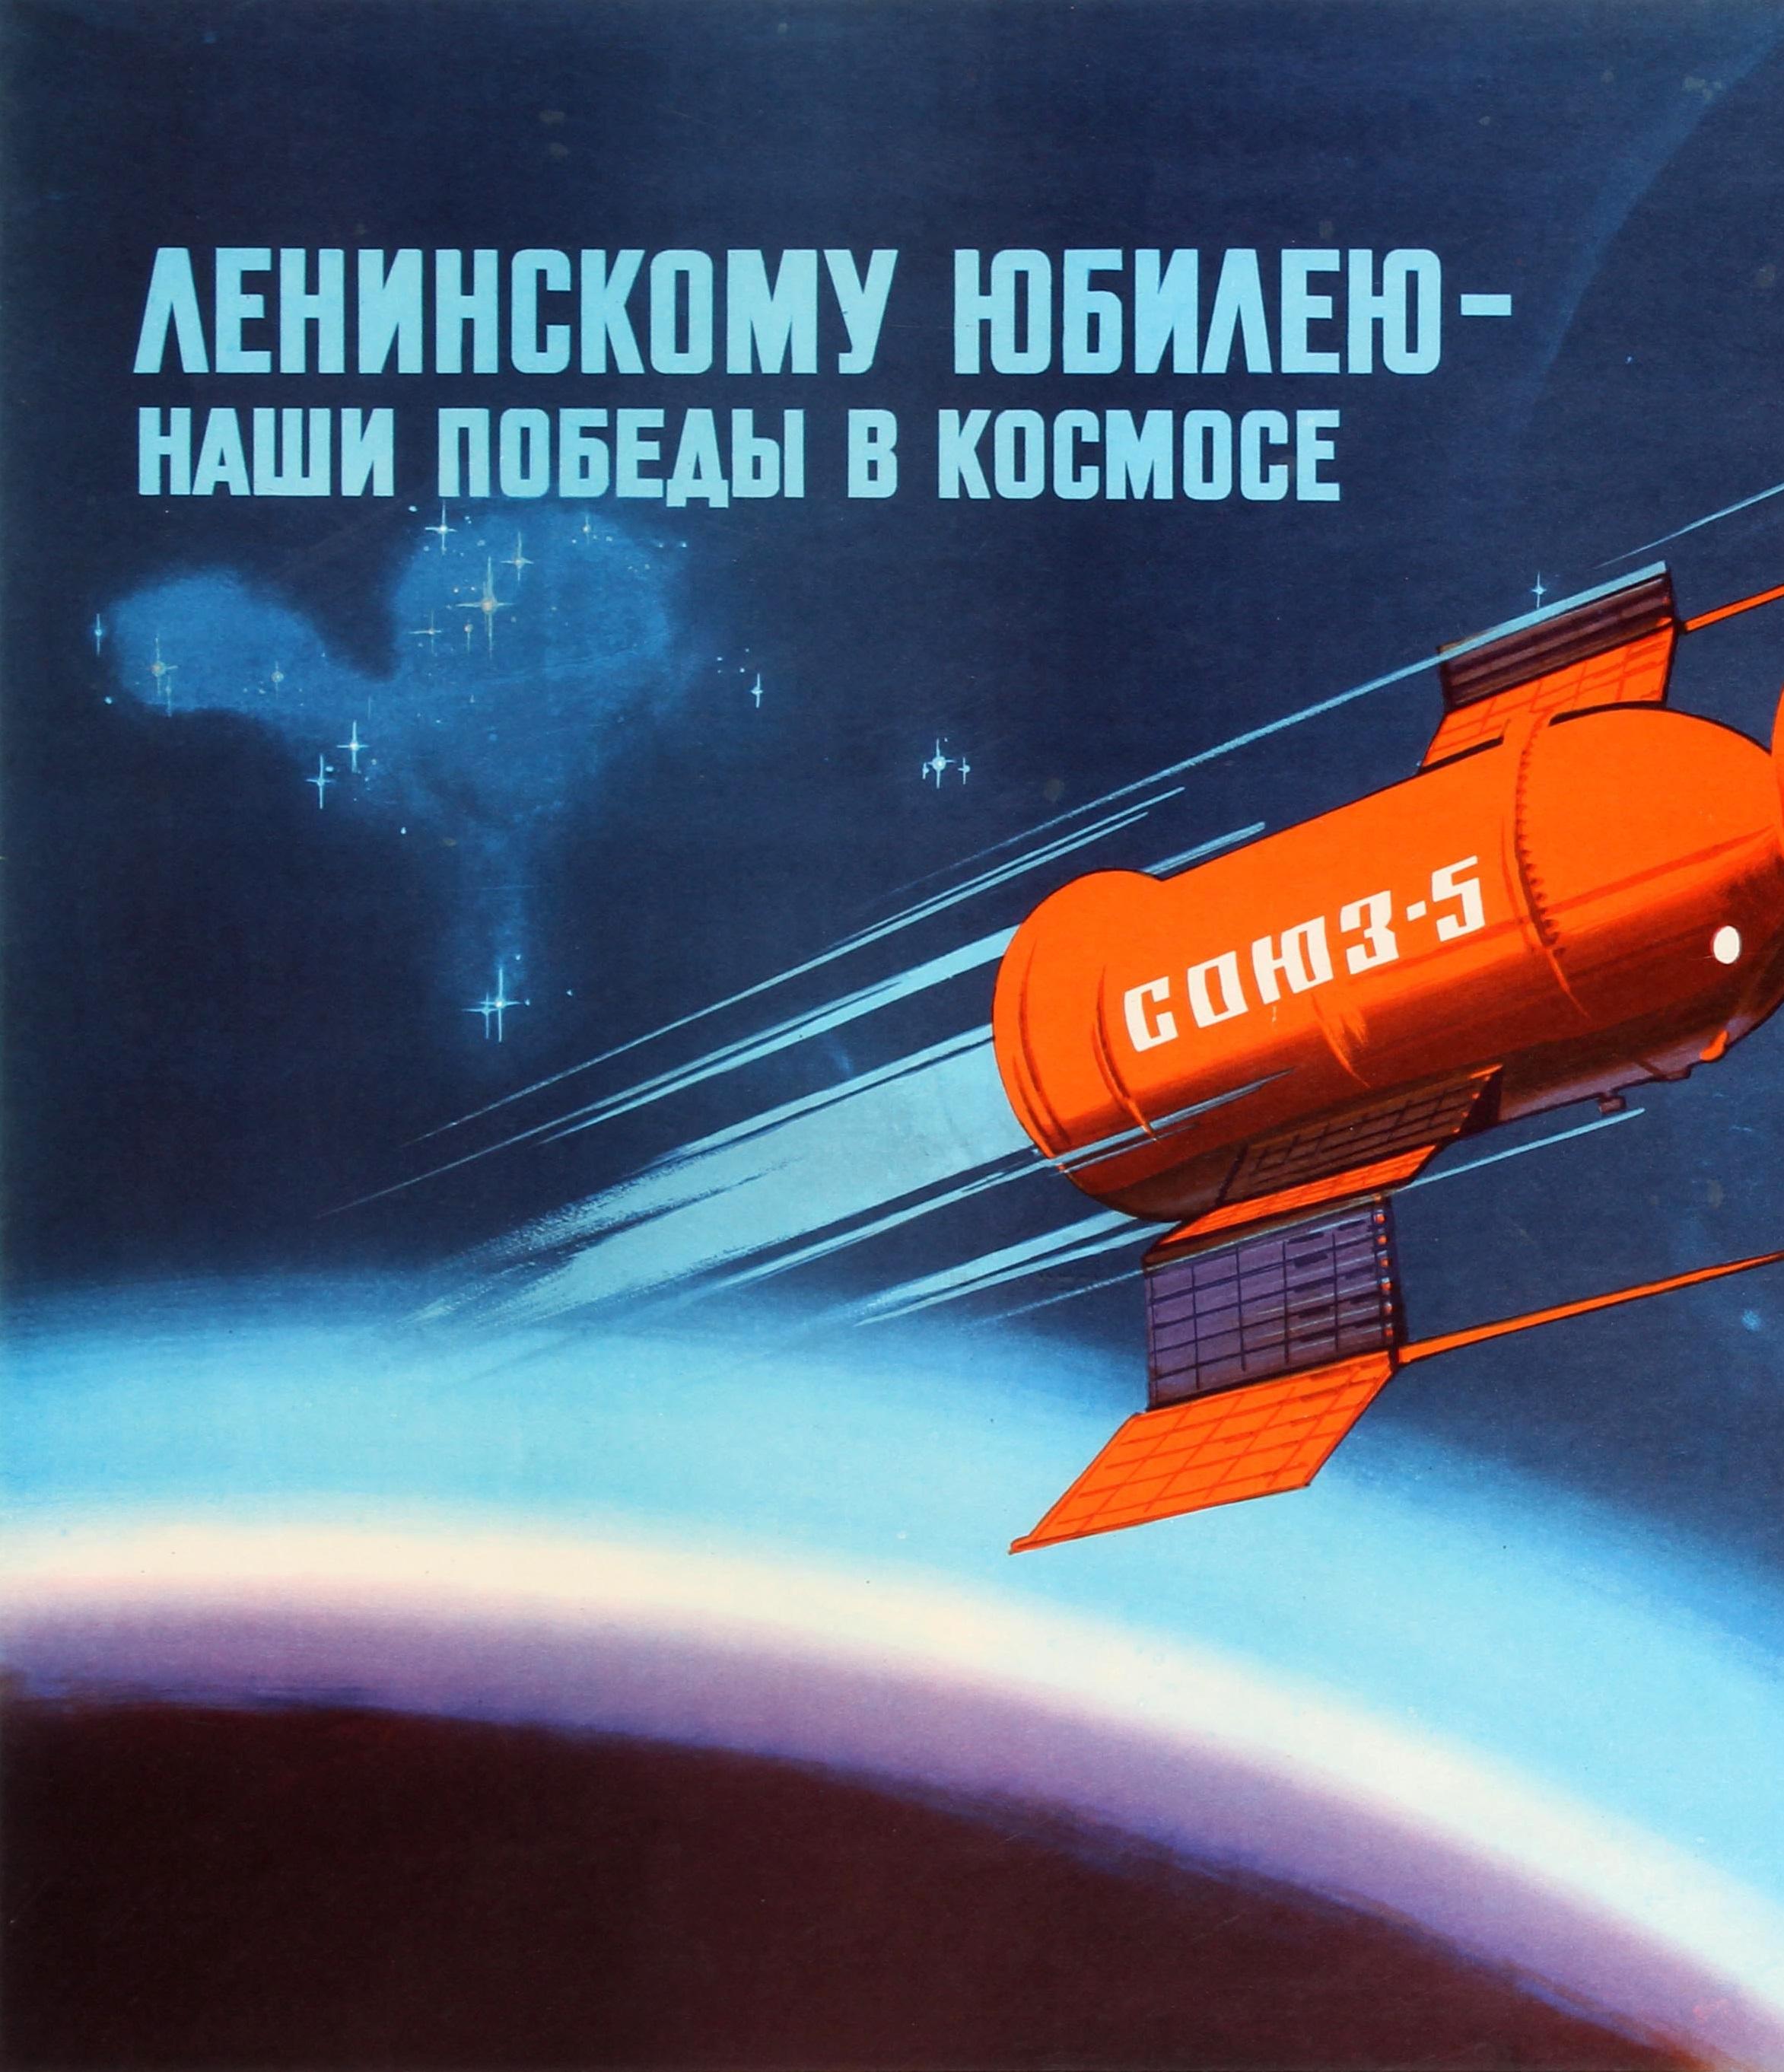 Original Vintage Soviet Poster Lenin Anniversary Victory In Space Soyuz Docking - Print by V. Viktorov